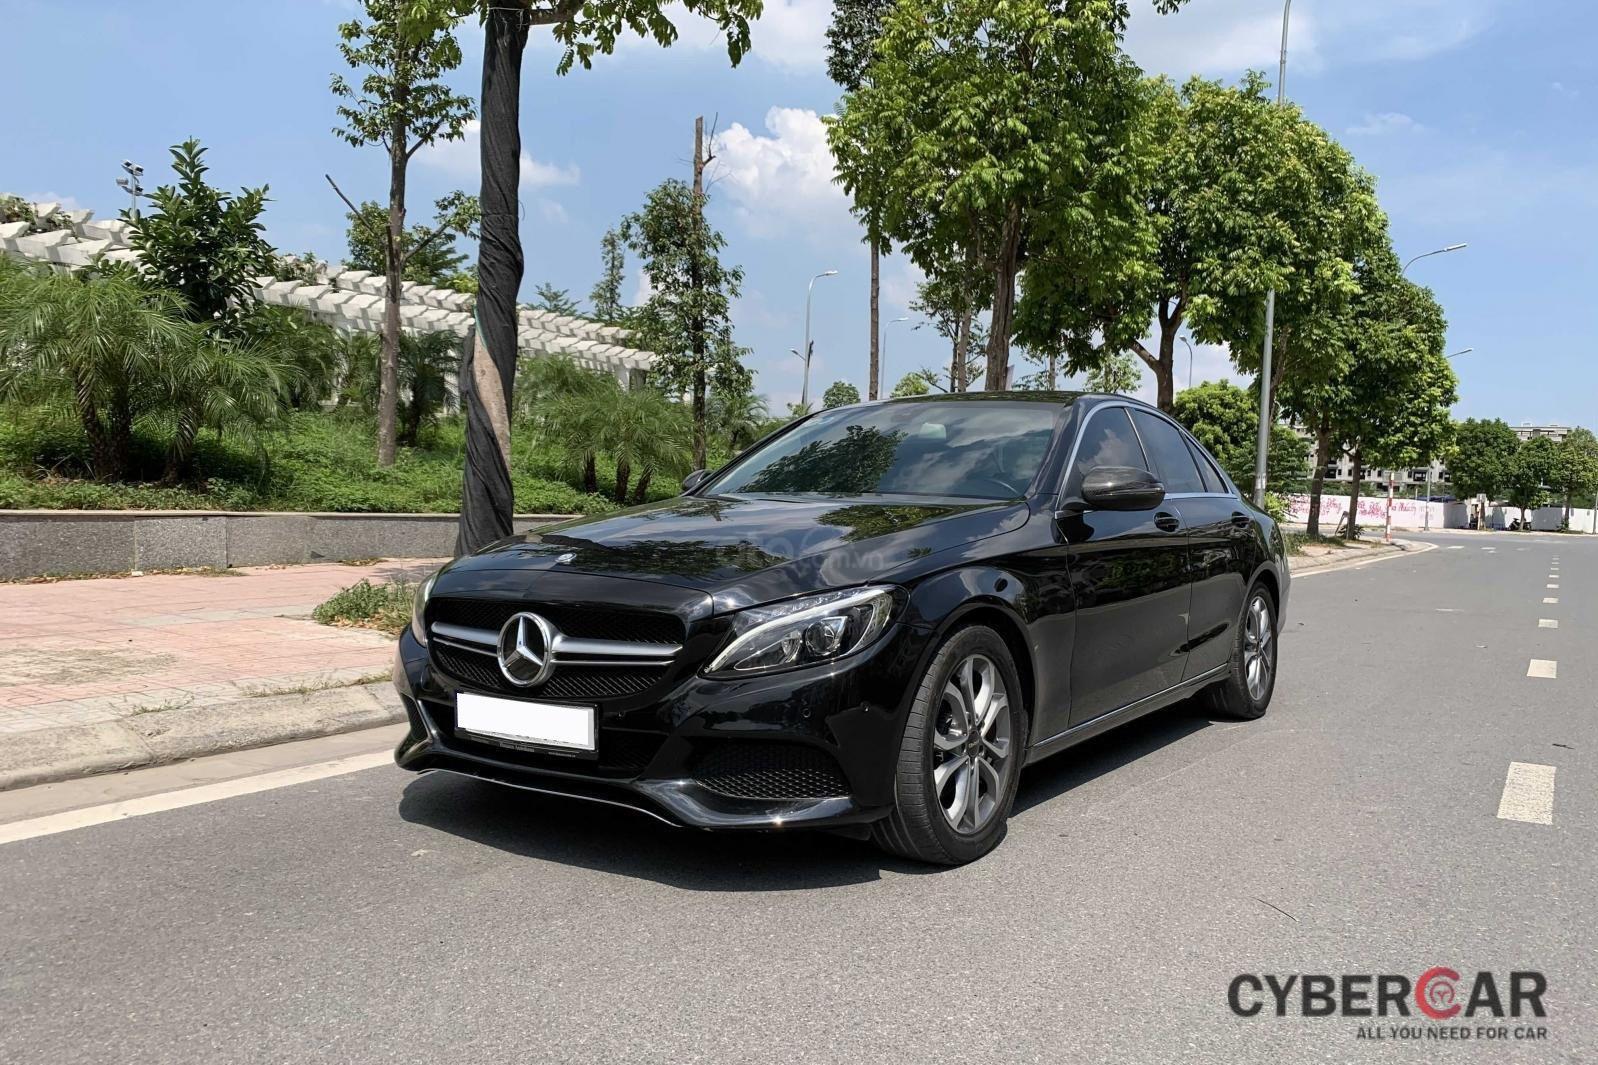 Mercedes-Benz C200 2015 rao bán 968 triệu đồng 1